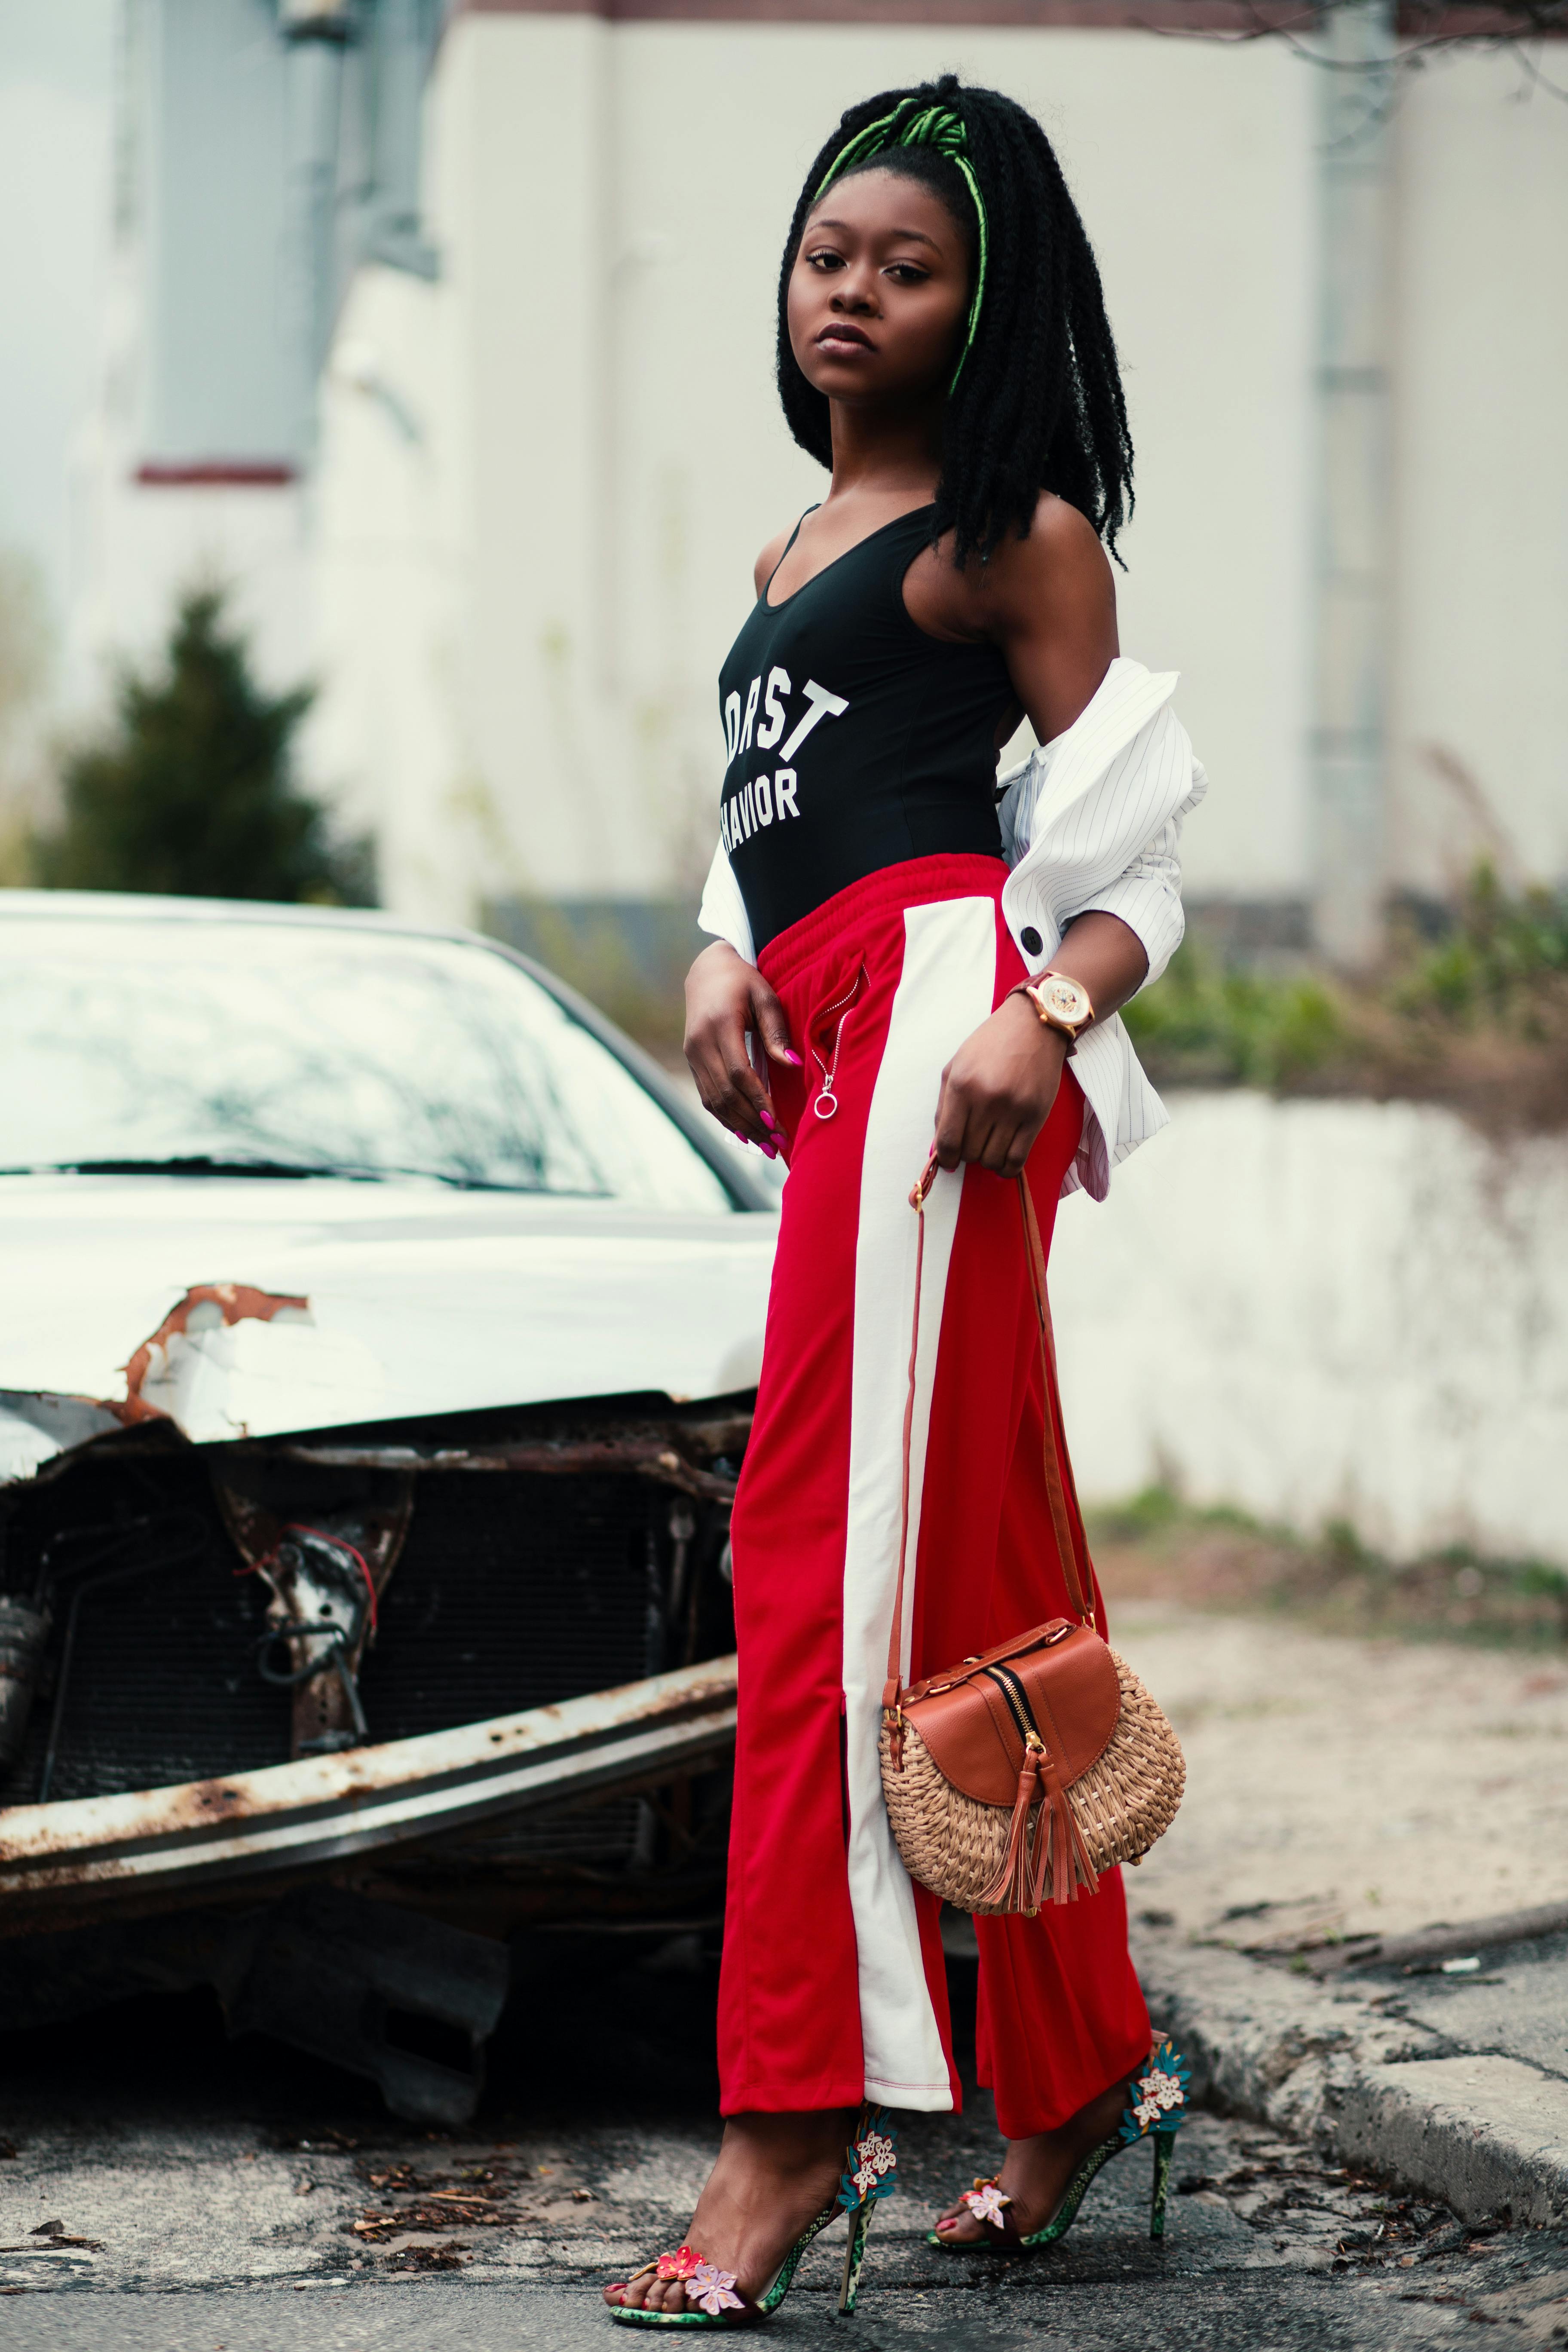 Women's Black Tank Top Red Track Pants Walking on Street · Free Stock Photo